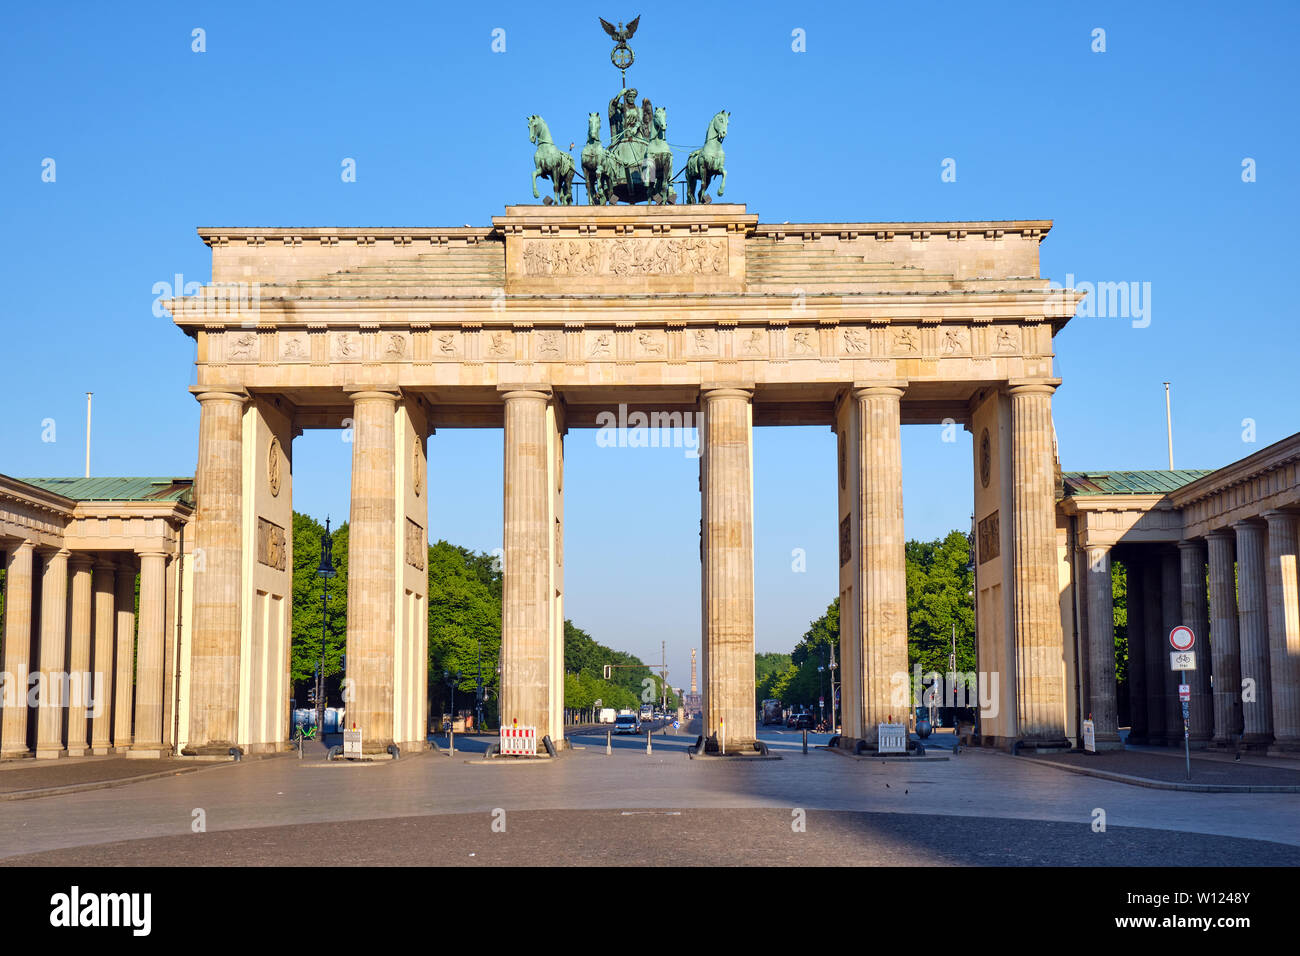 The Brandenburg Gate in Berlin early in the morning Stock Photo